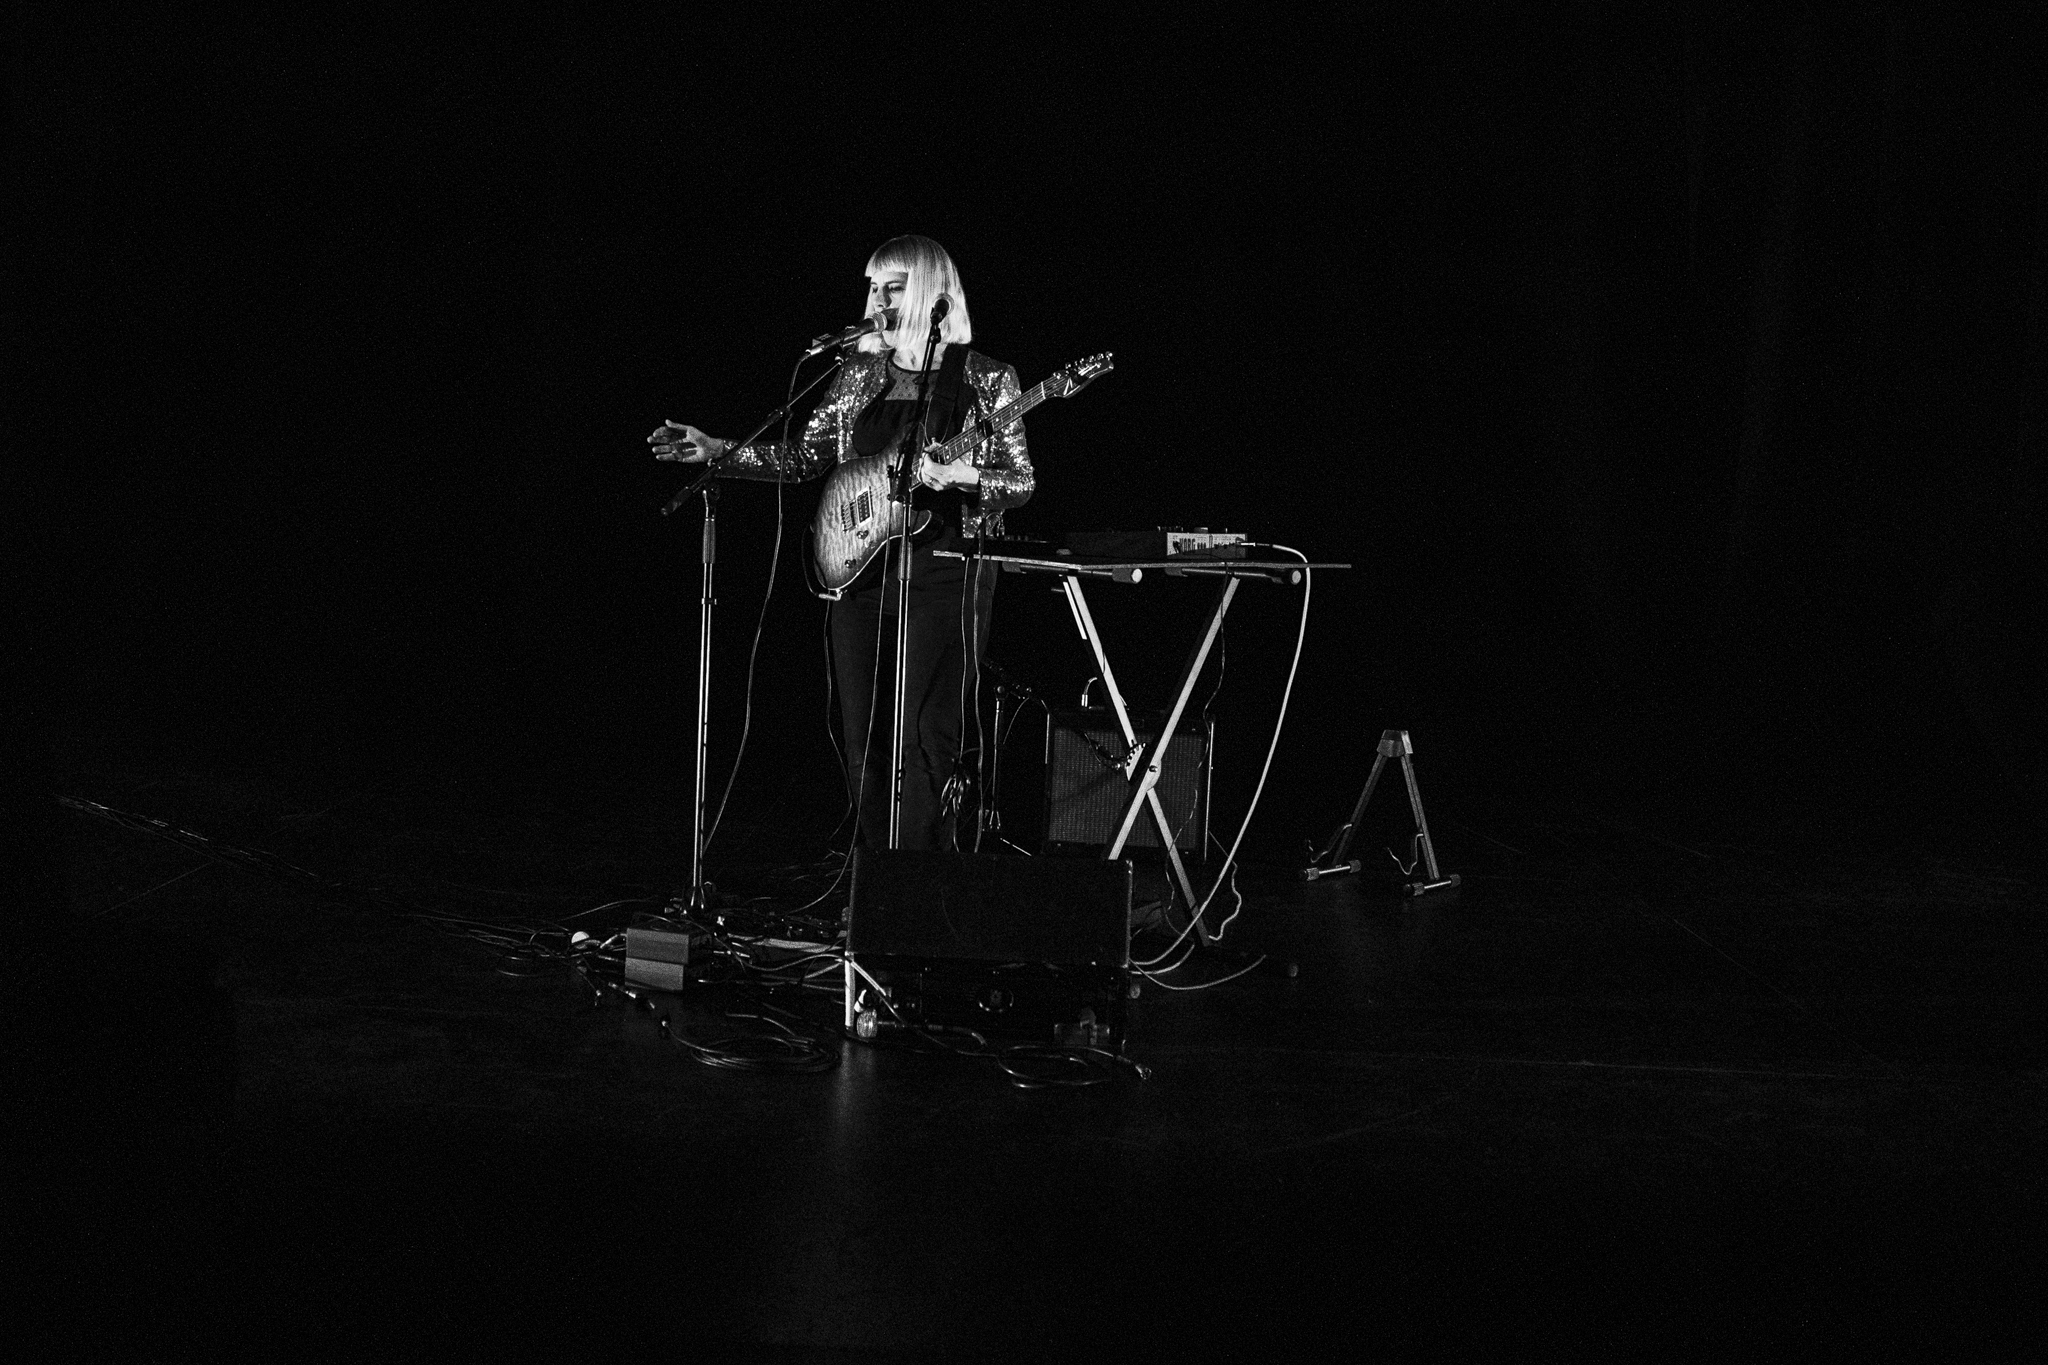 Gorman Sessions: A woman standing under a spotlight holding a guitar